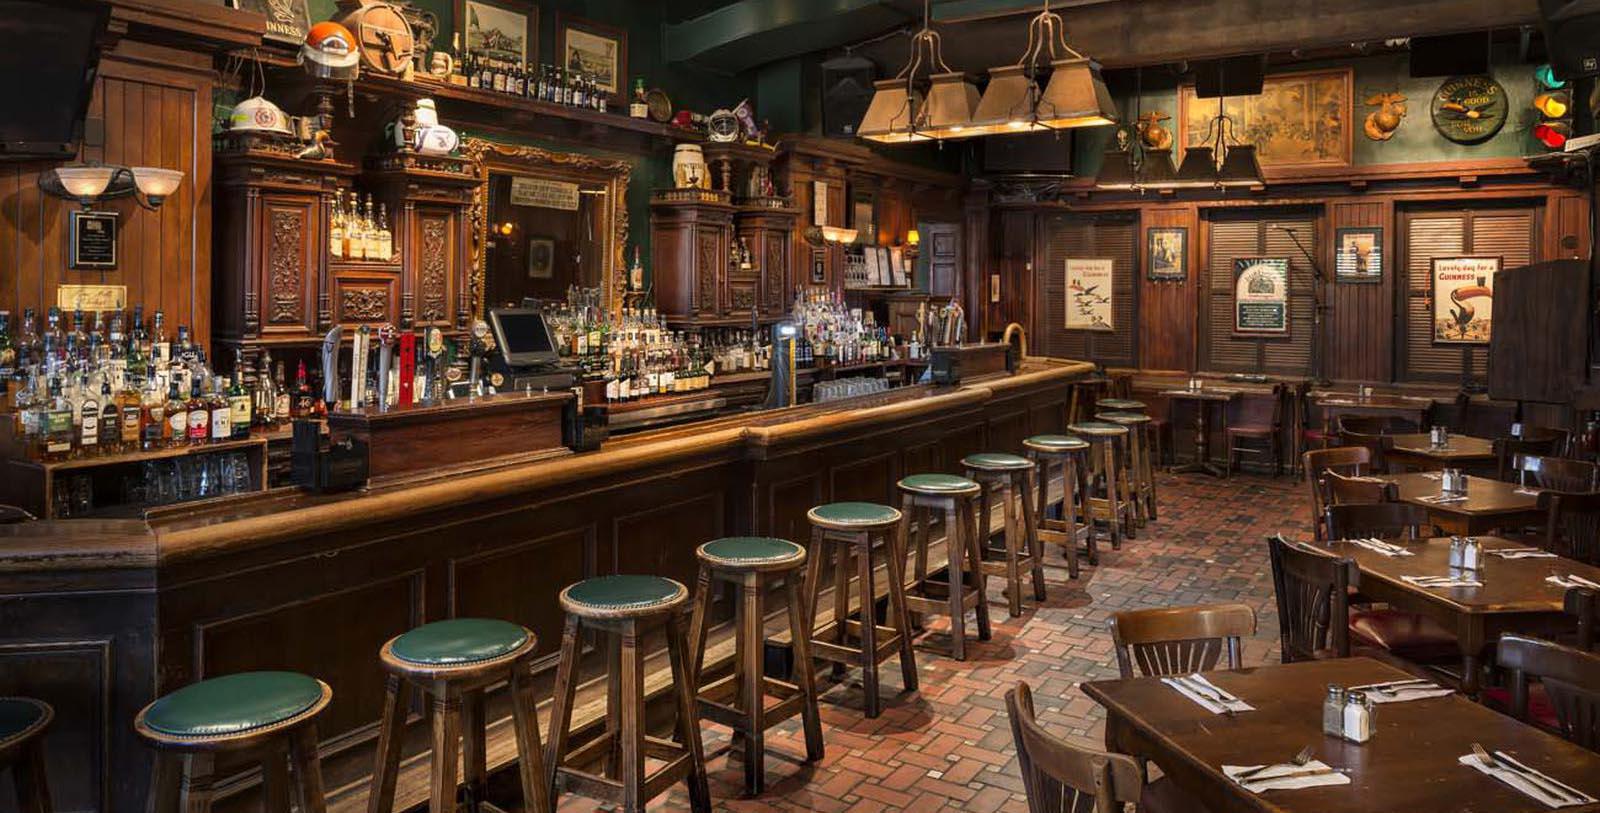 Taste authentic Irish cuisine and enjoy a pint in The Dubliner Irish Pub and Restaurant located in the Phoenix Park Hotel.